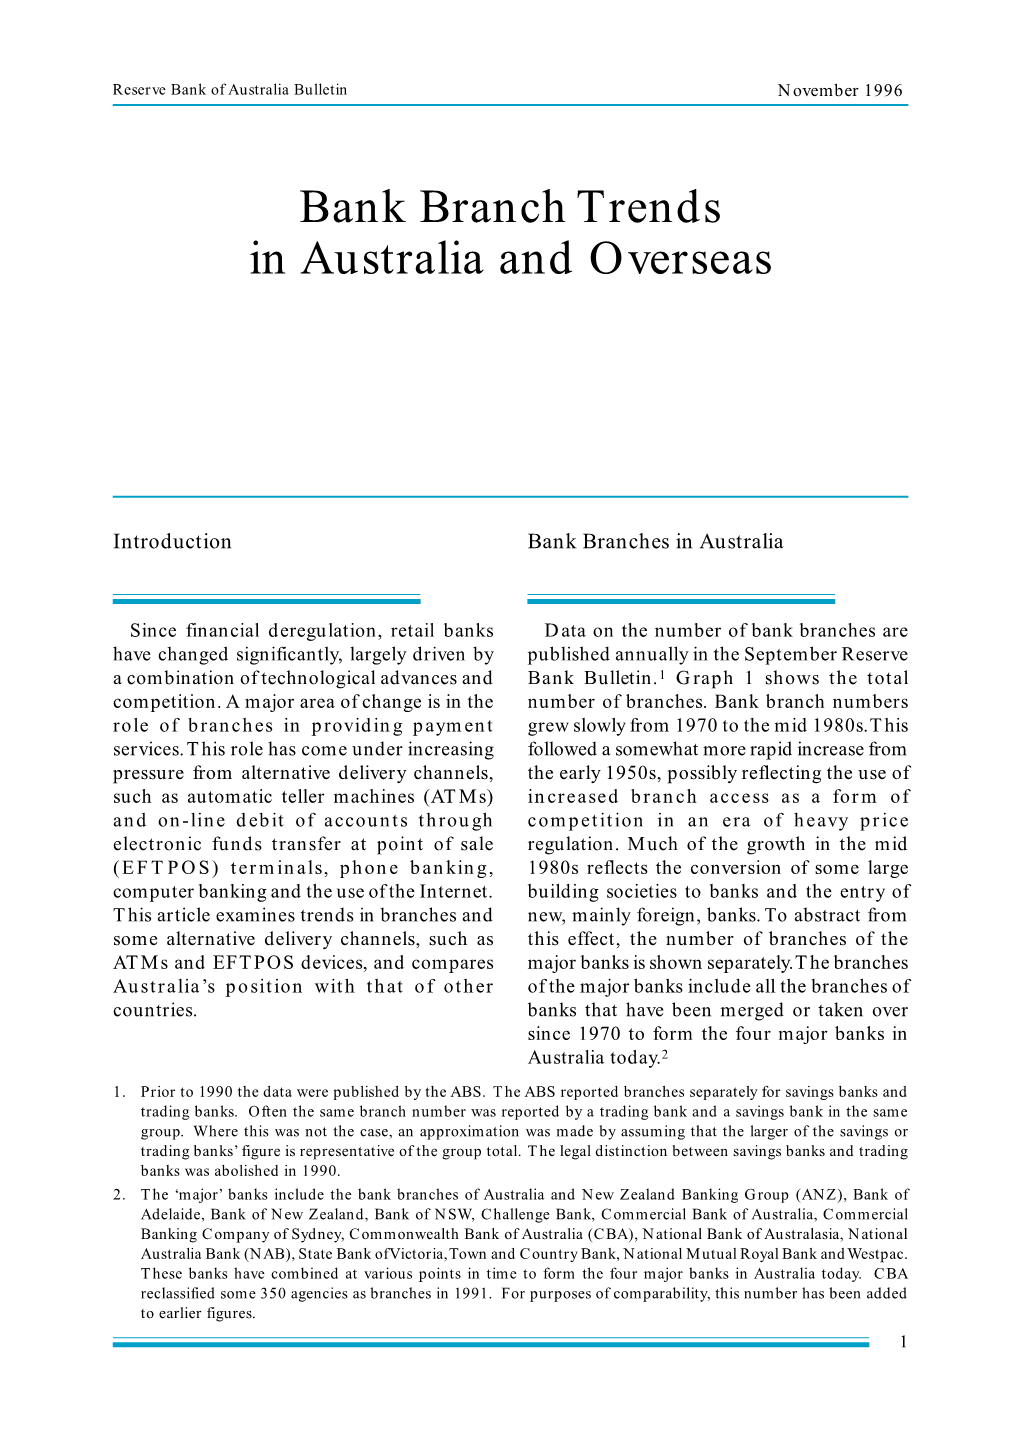 Bank Branch Trends in Australia and Overseas